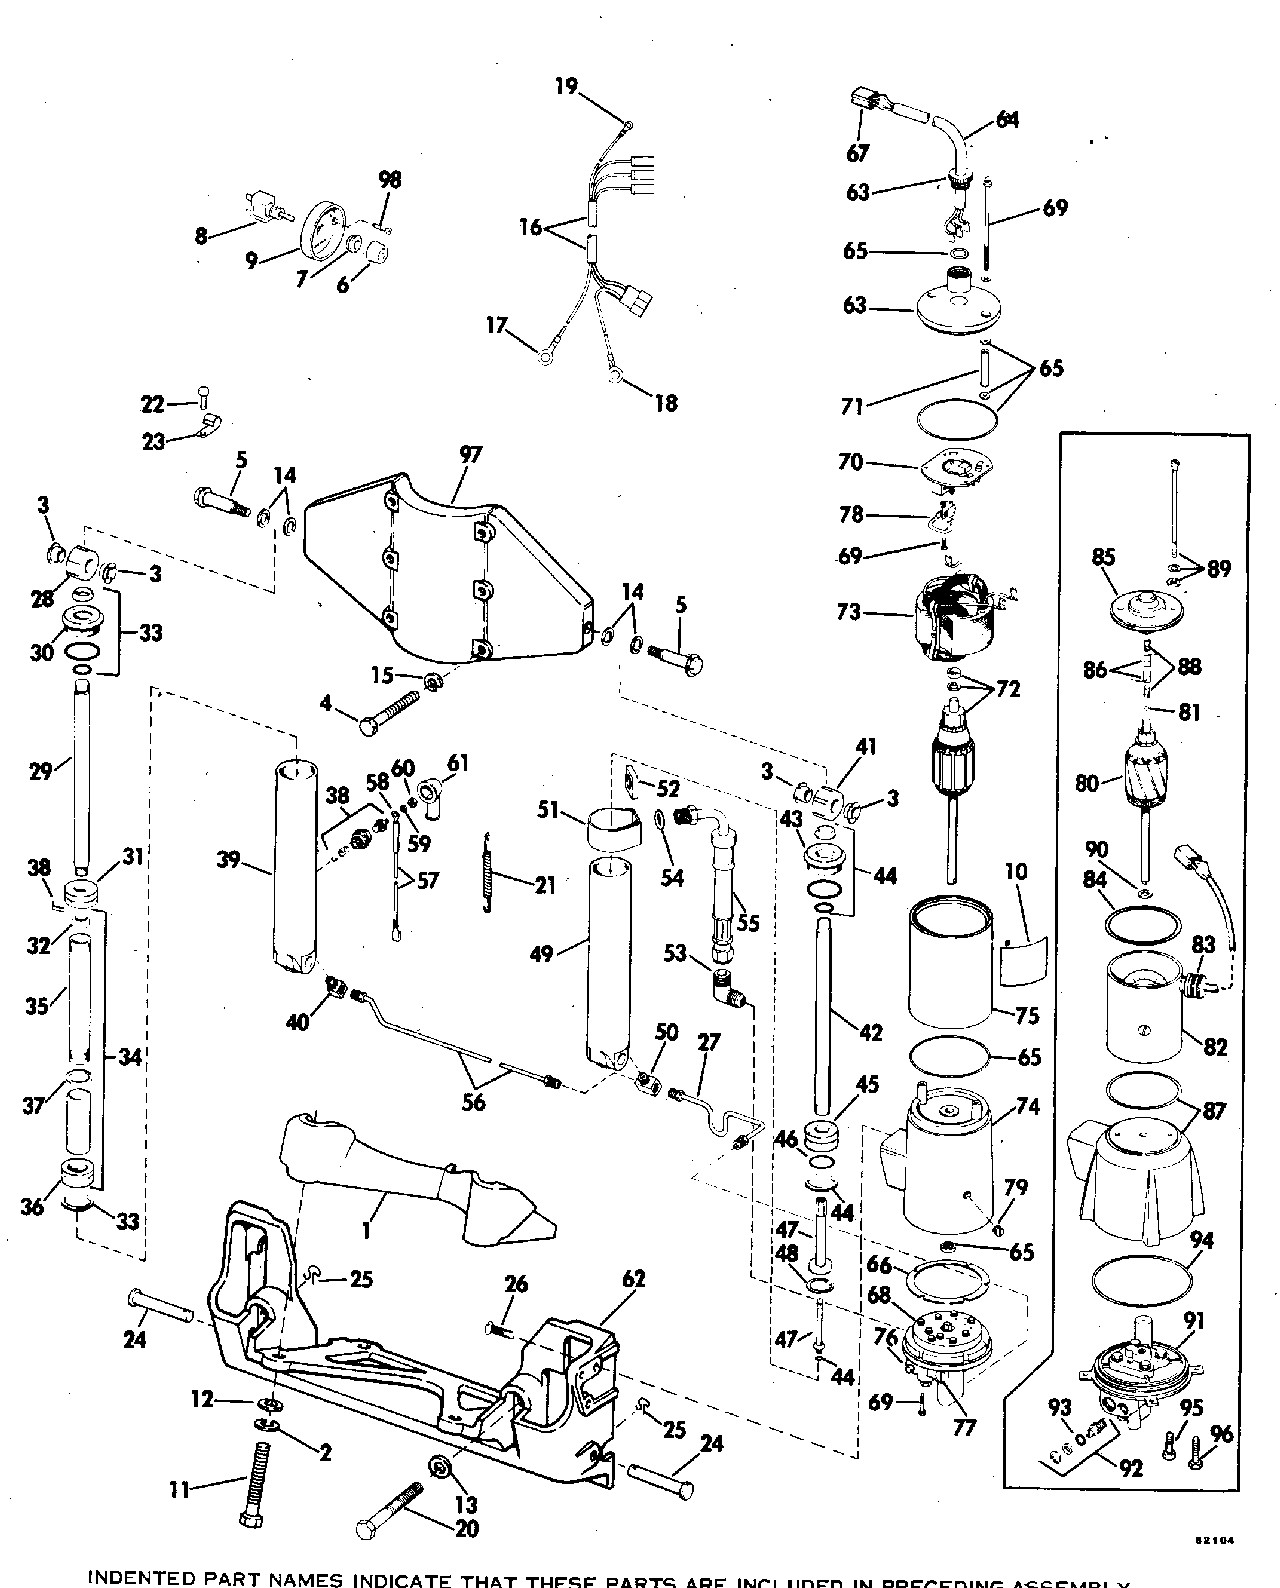 Evinrude 15 Hp Parts Diagram Power Tilt and Trim 55 Hp Power Tilt Trim 1978 Accessories for Of Evinrude 15 Hp Parts Diagram